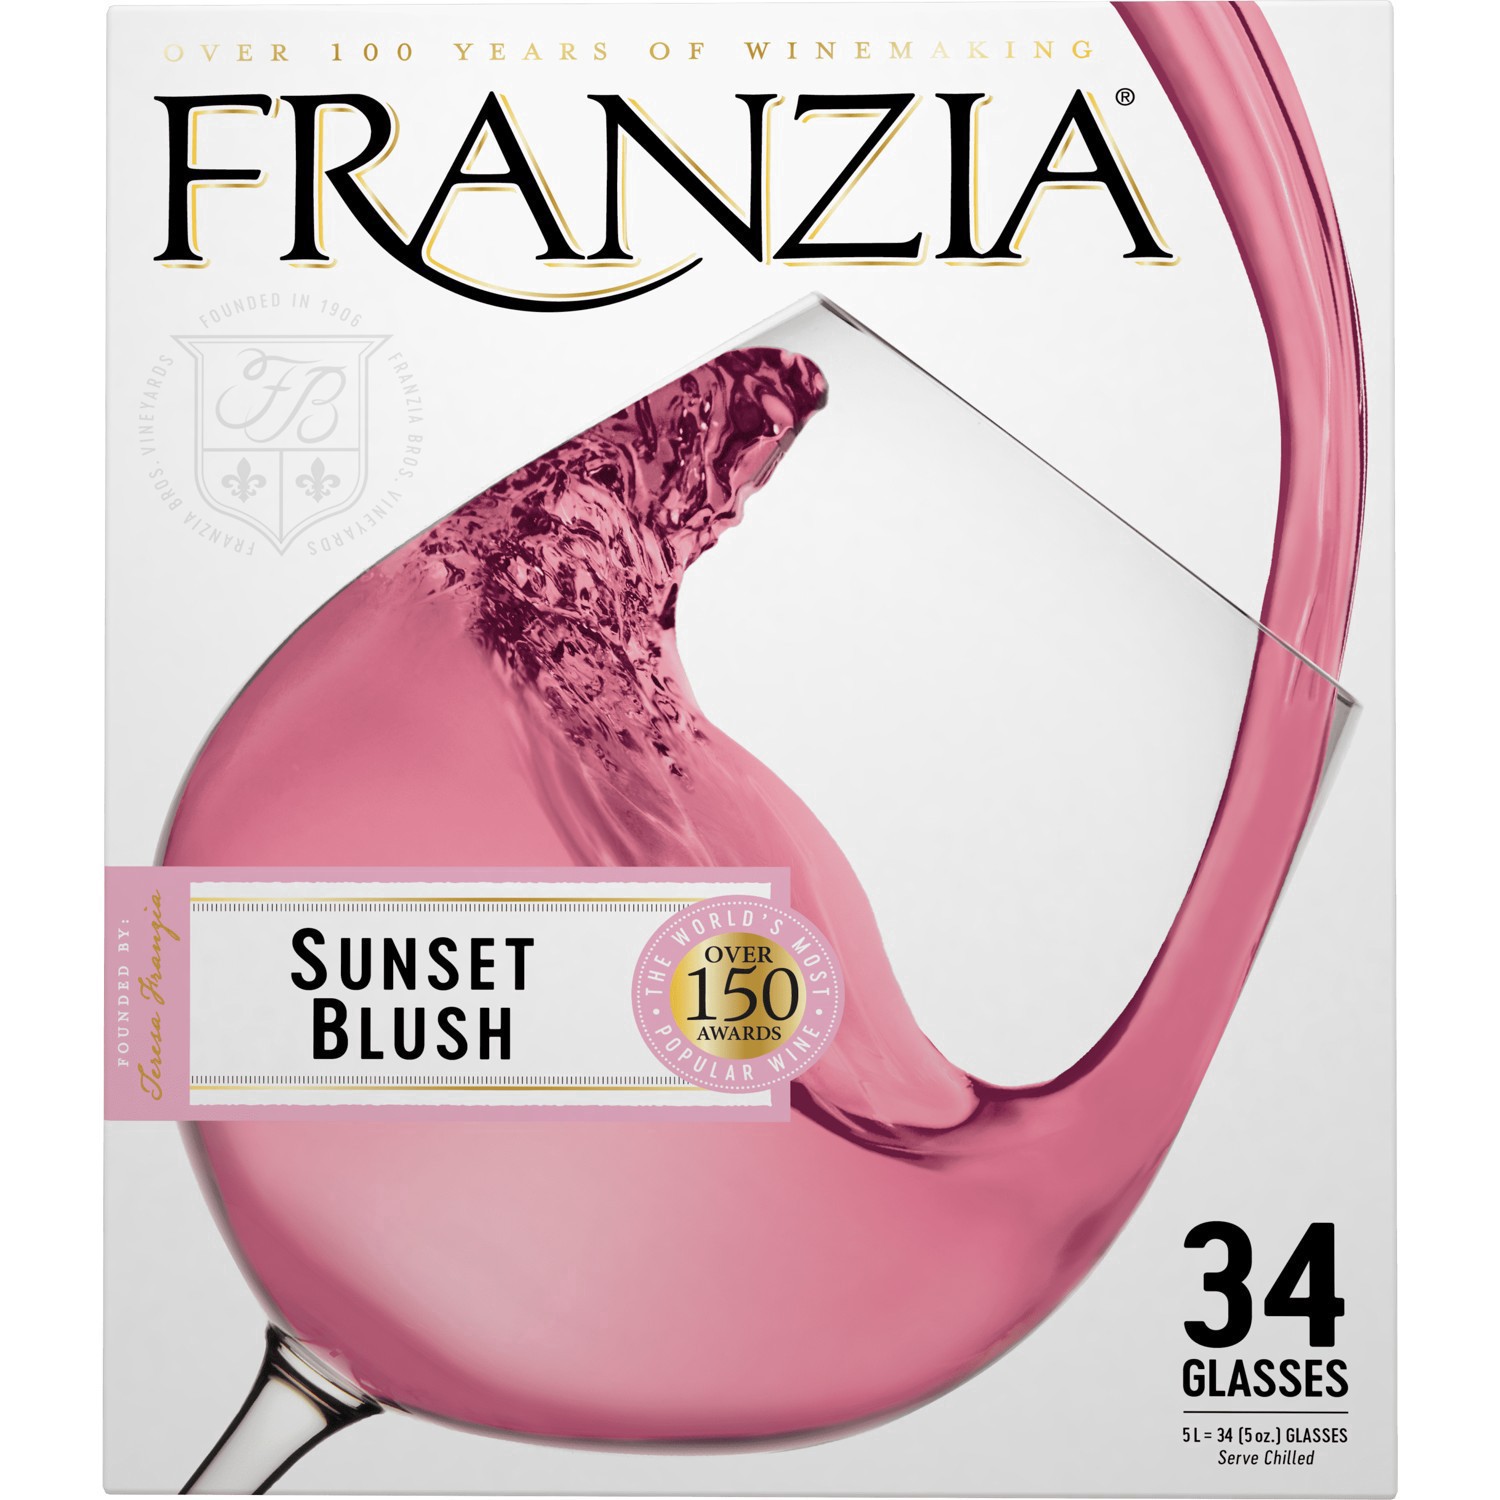 slide 21 of 27, Franzia Sunset Blush Pink Wine, 5 liter box